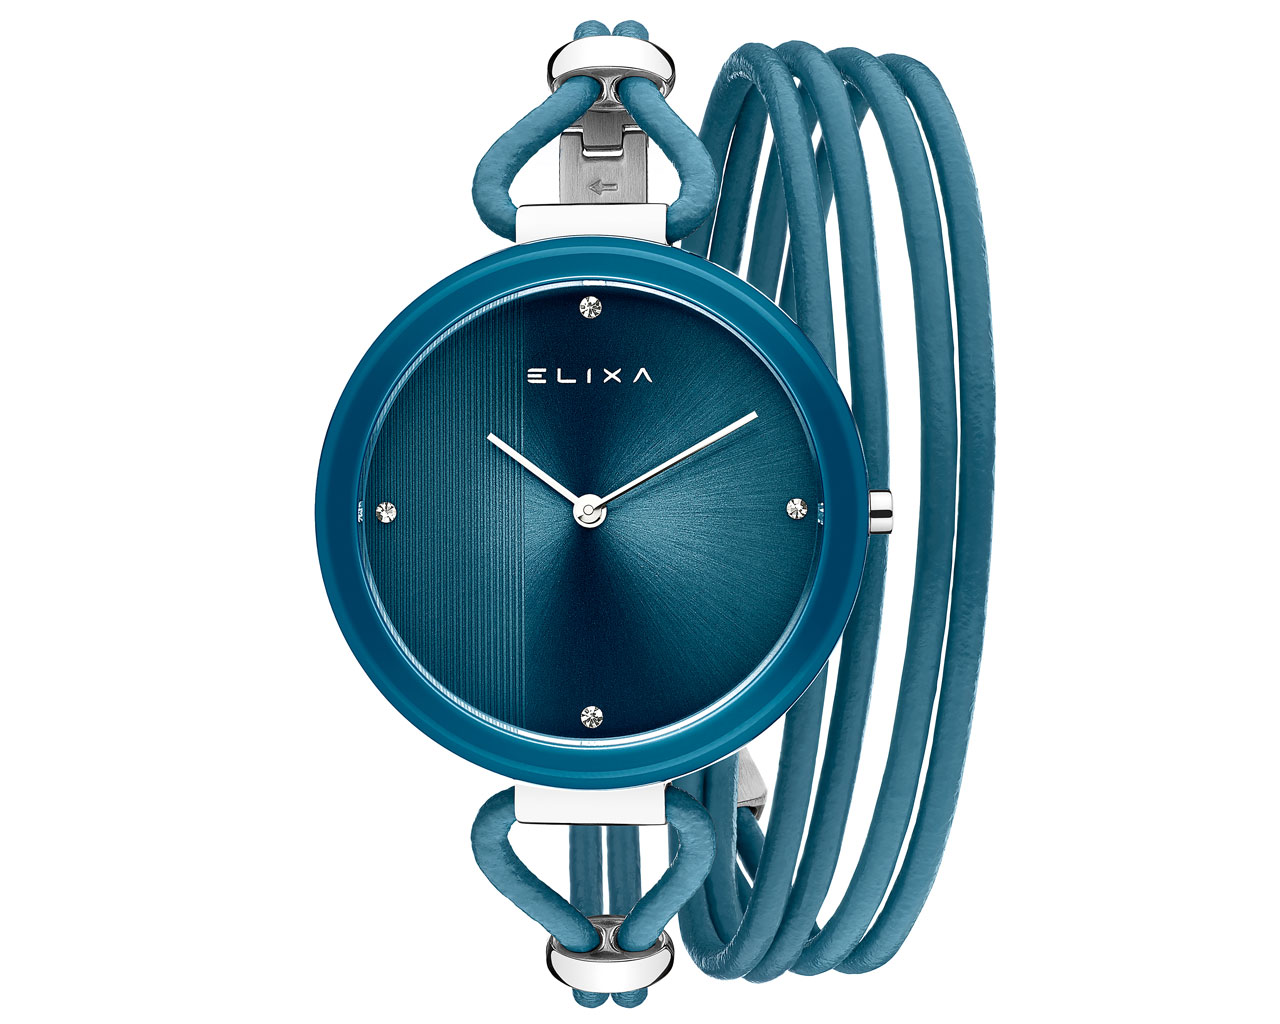 Đồng hồ Elixa E135-L577